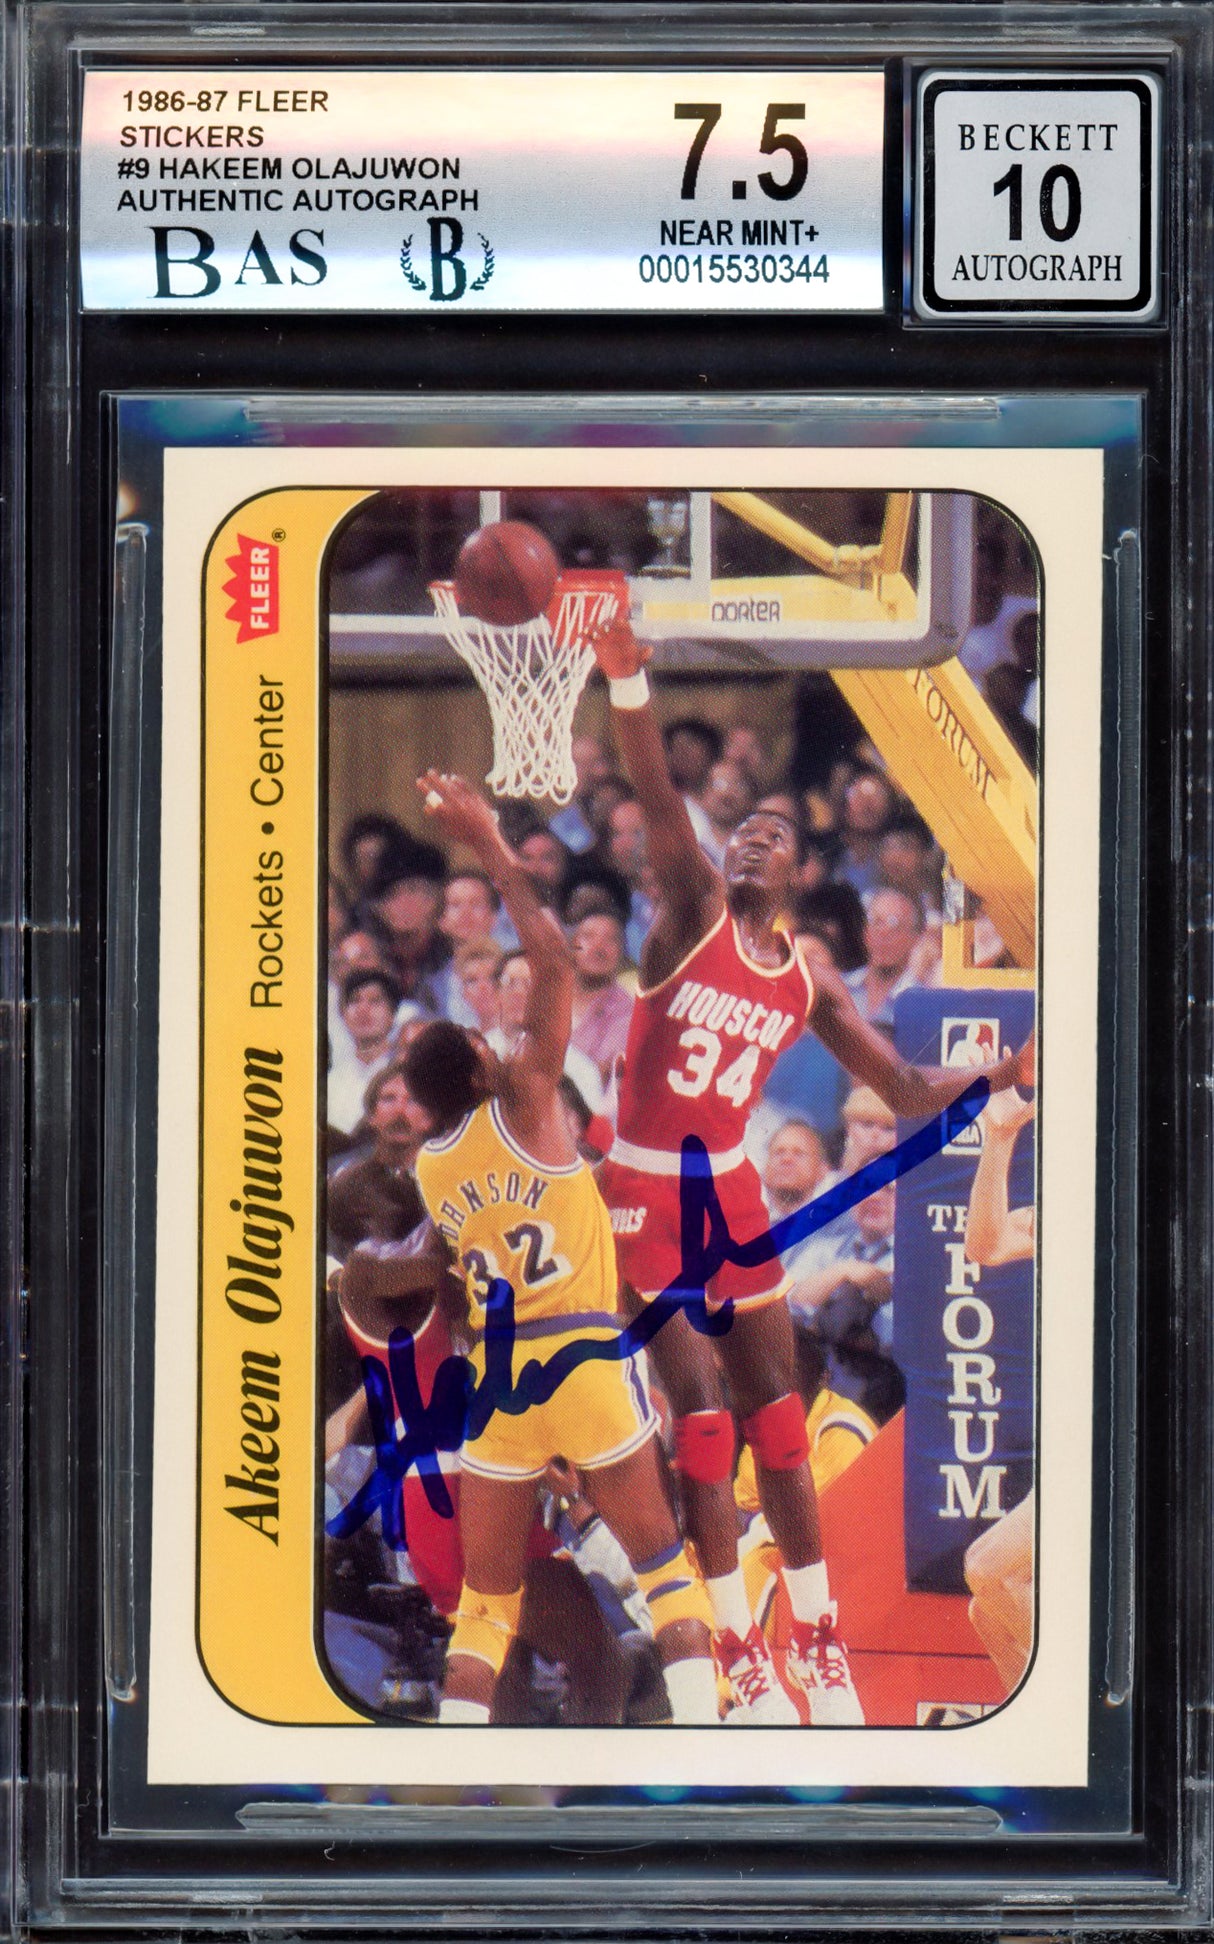 Hakeem Olajuwon Autographed 1986-87 Fleer Stickers Rookie Card #9 Houston Rockets BGS 7.5 Auto Grade Gem Mint 10 Beckett BAS #15530344